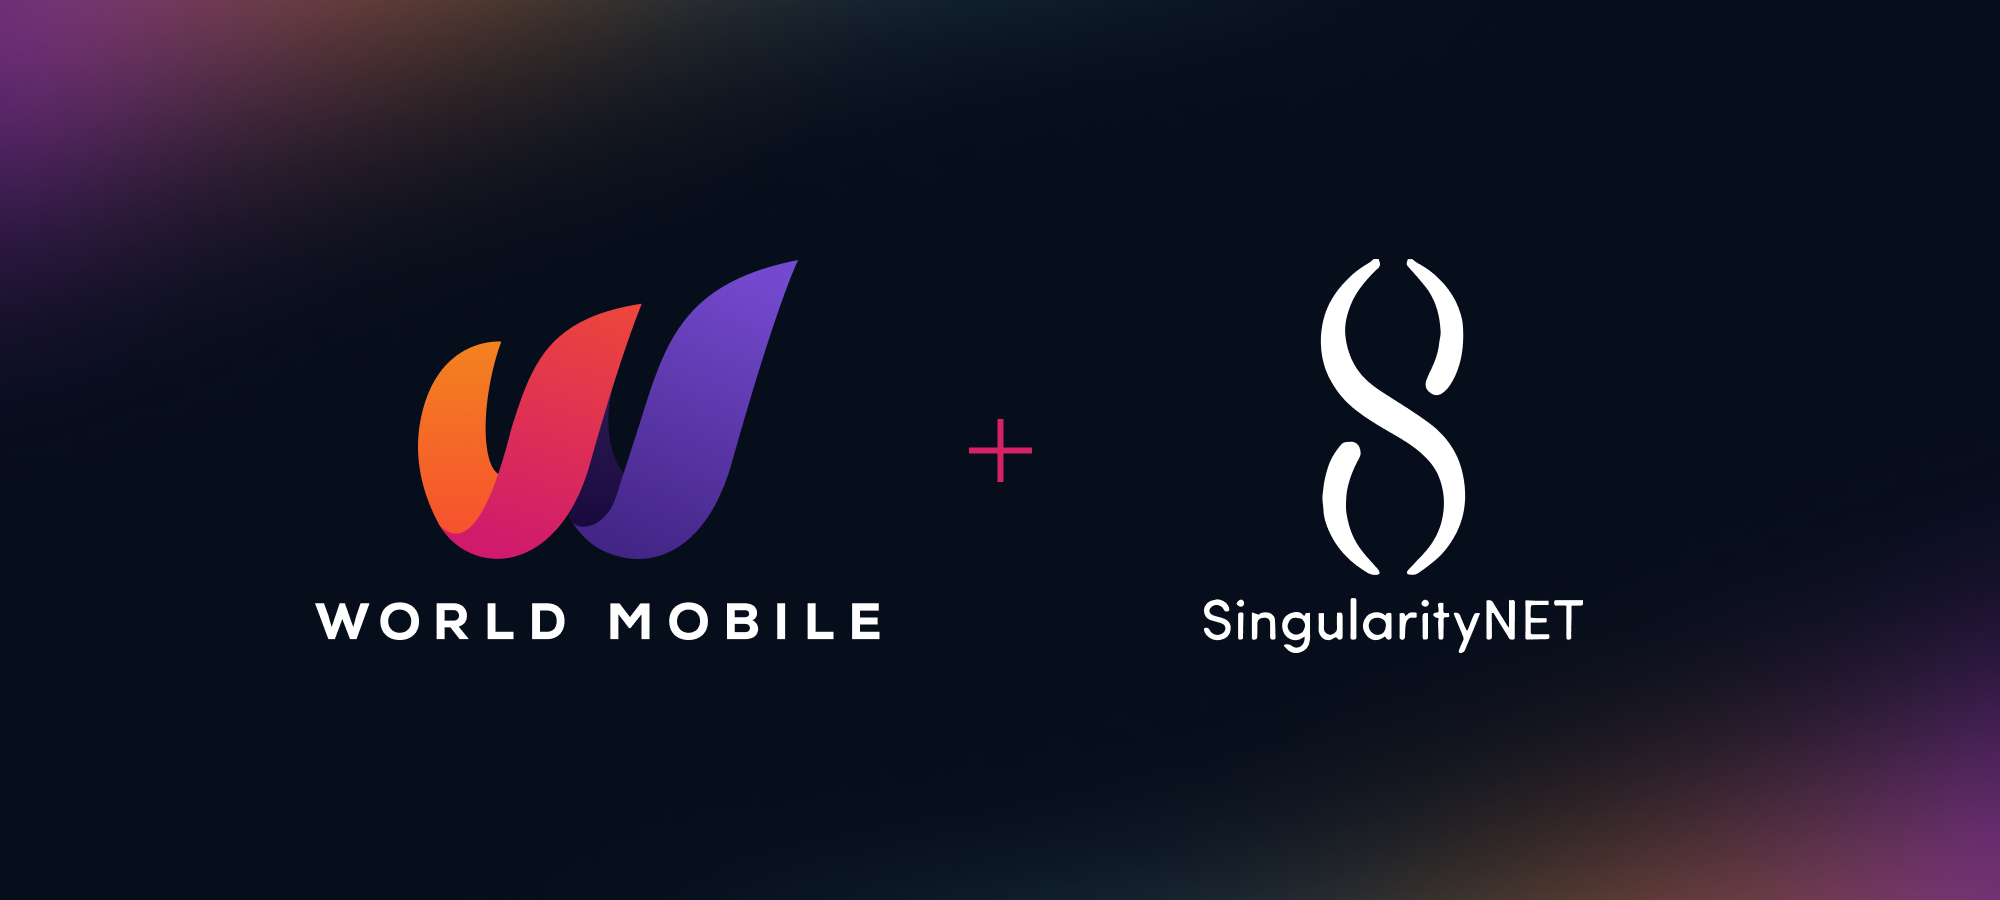 World Mobile: SingularityNET Partnership